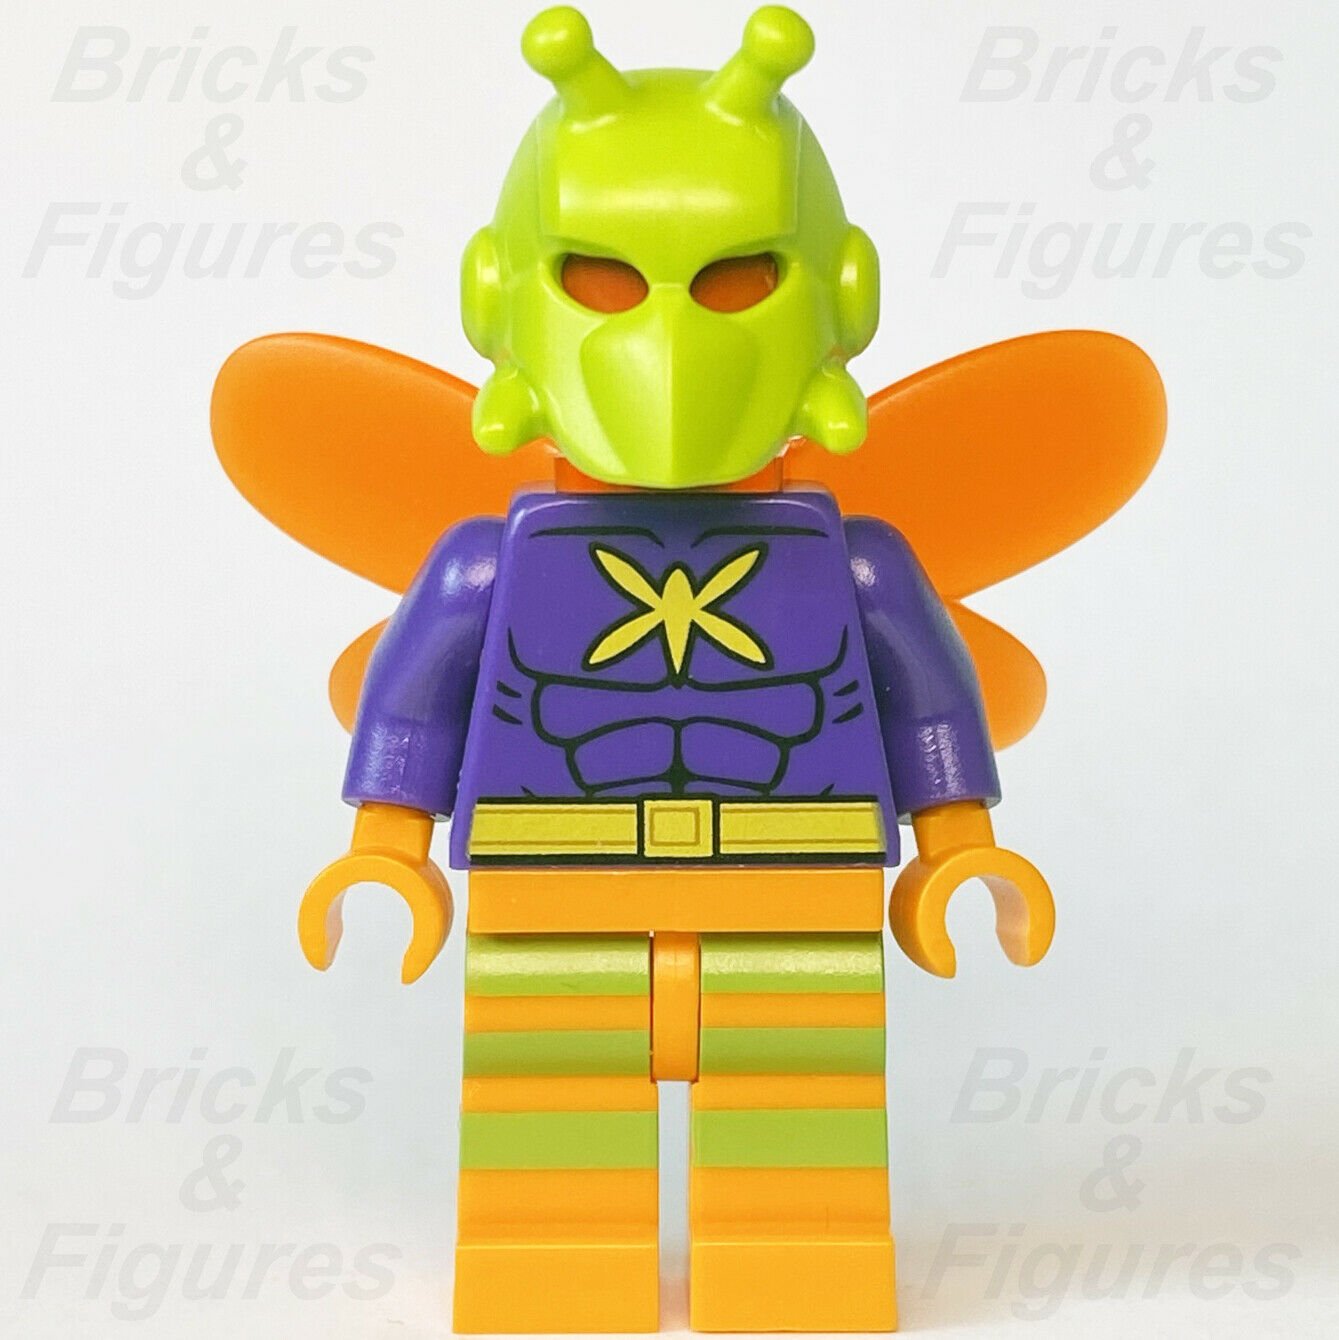 New DC Super Heroes LEGO Killer Moth Drury Walker Batman 2 Minifigure 76054 - Bricks & Figures